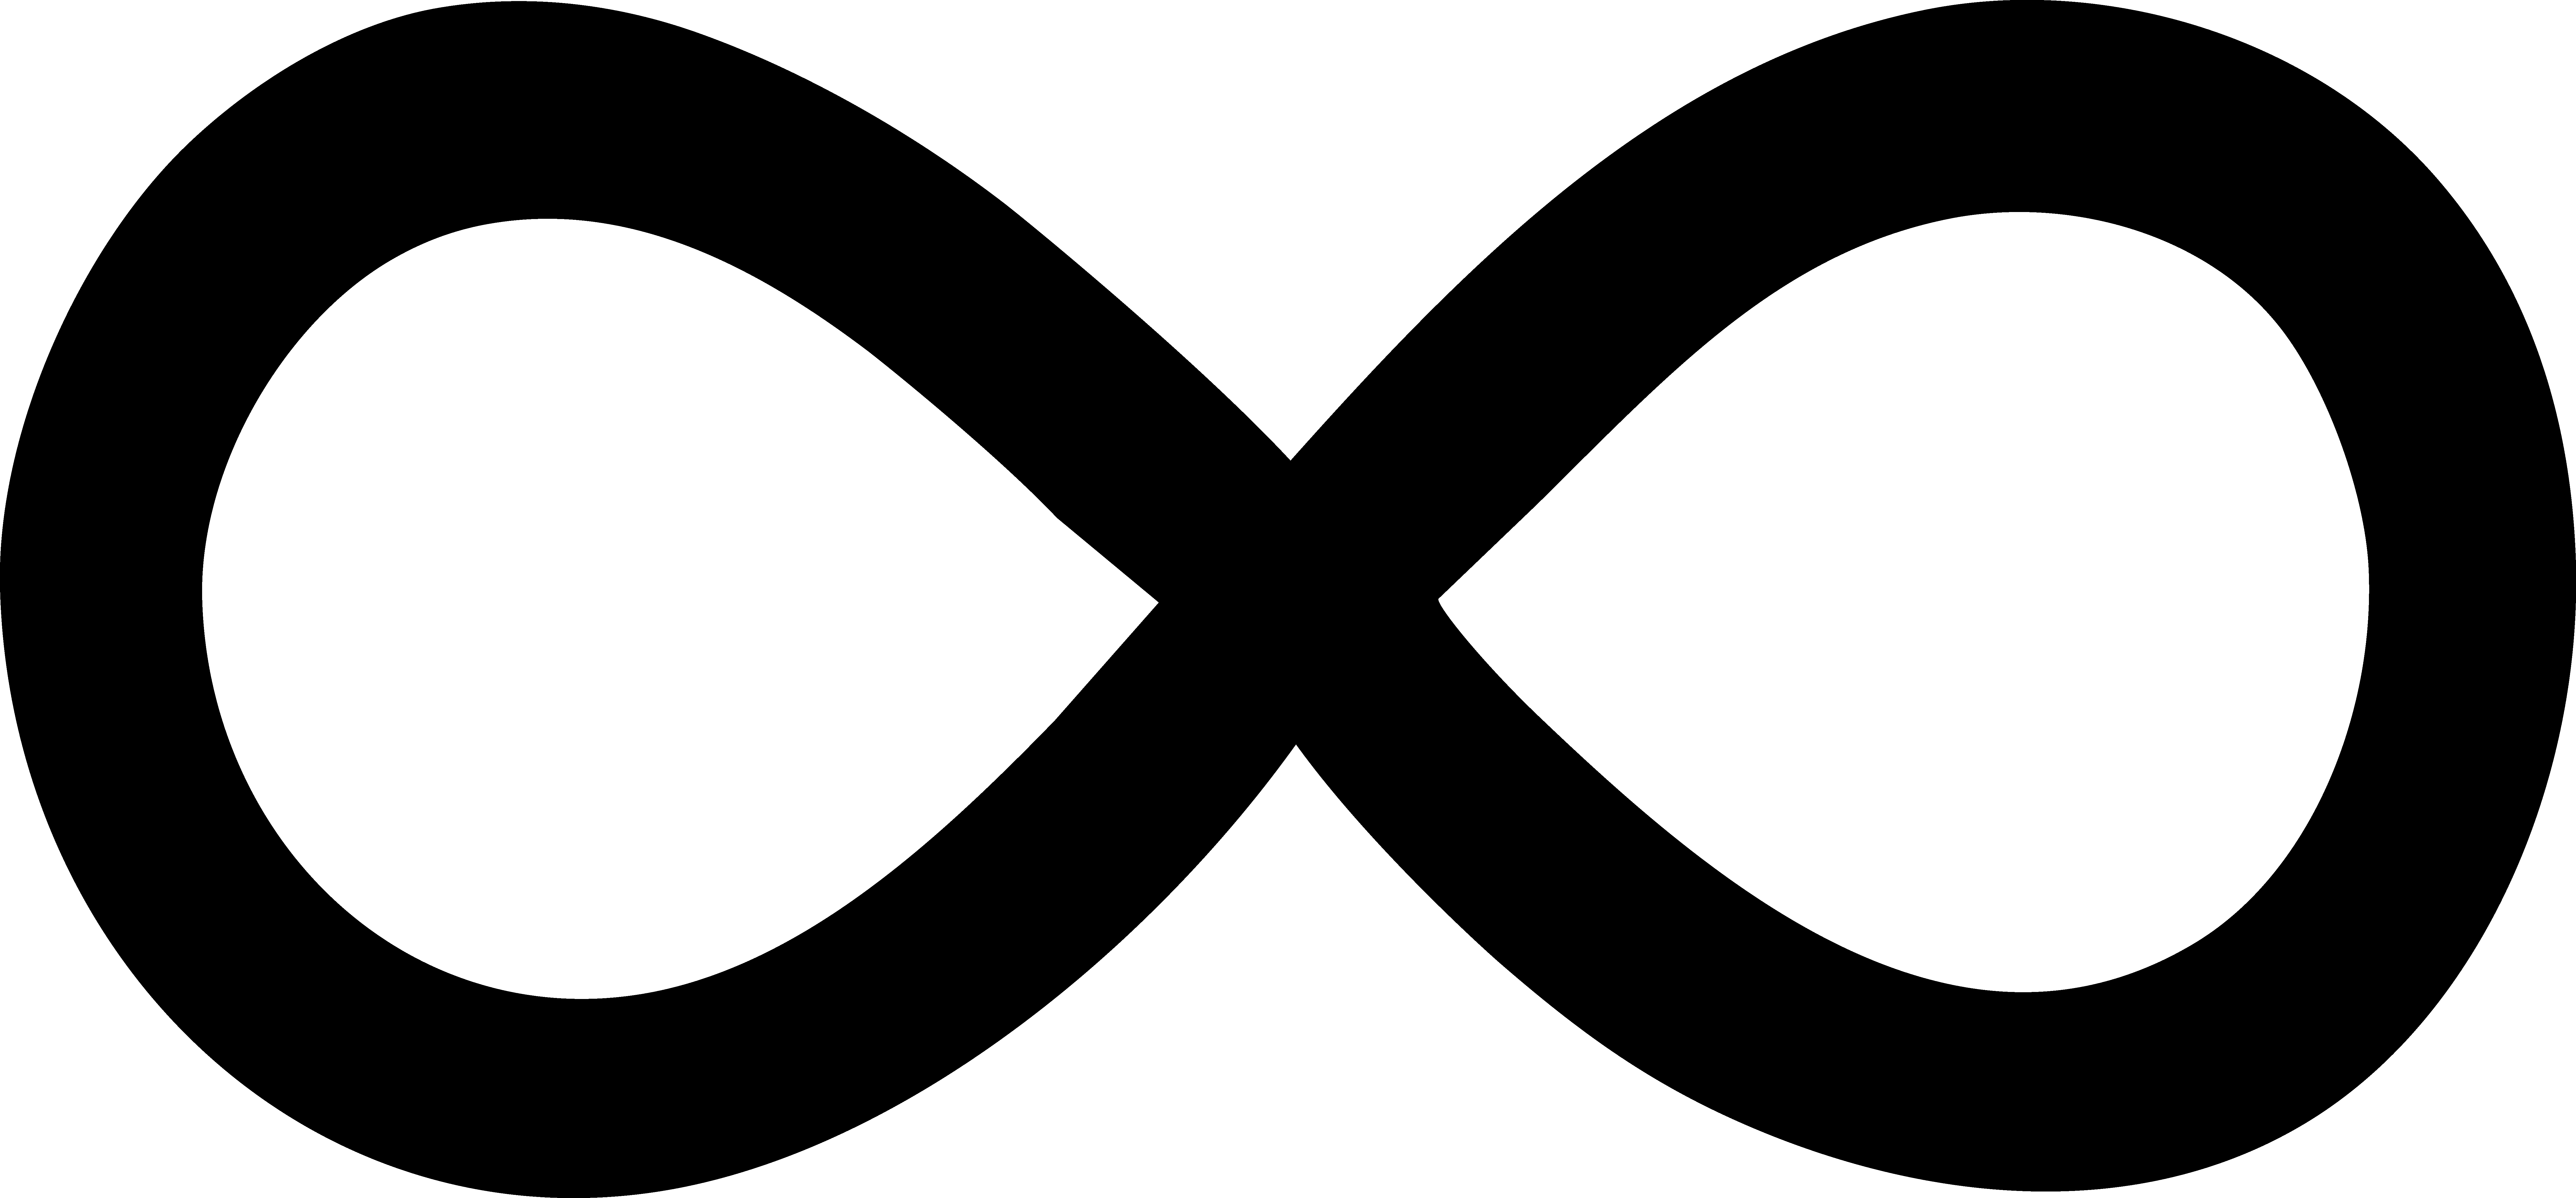 Infiniti Logo Vector